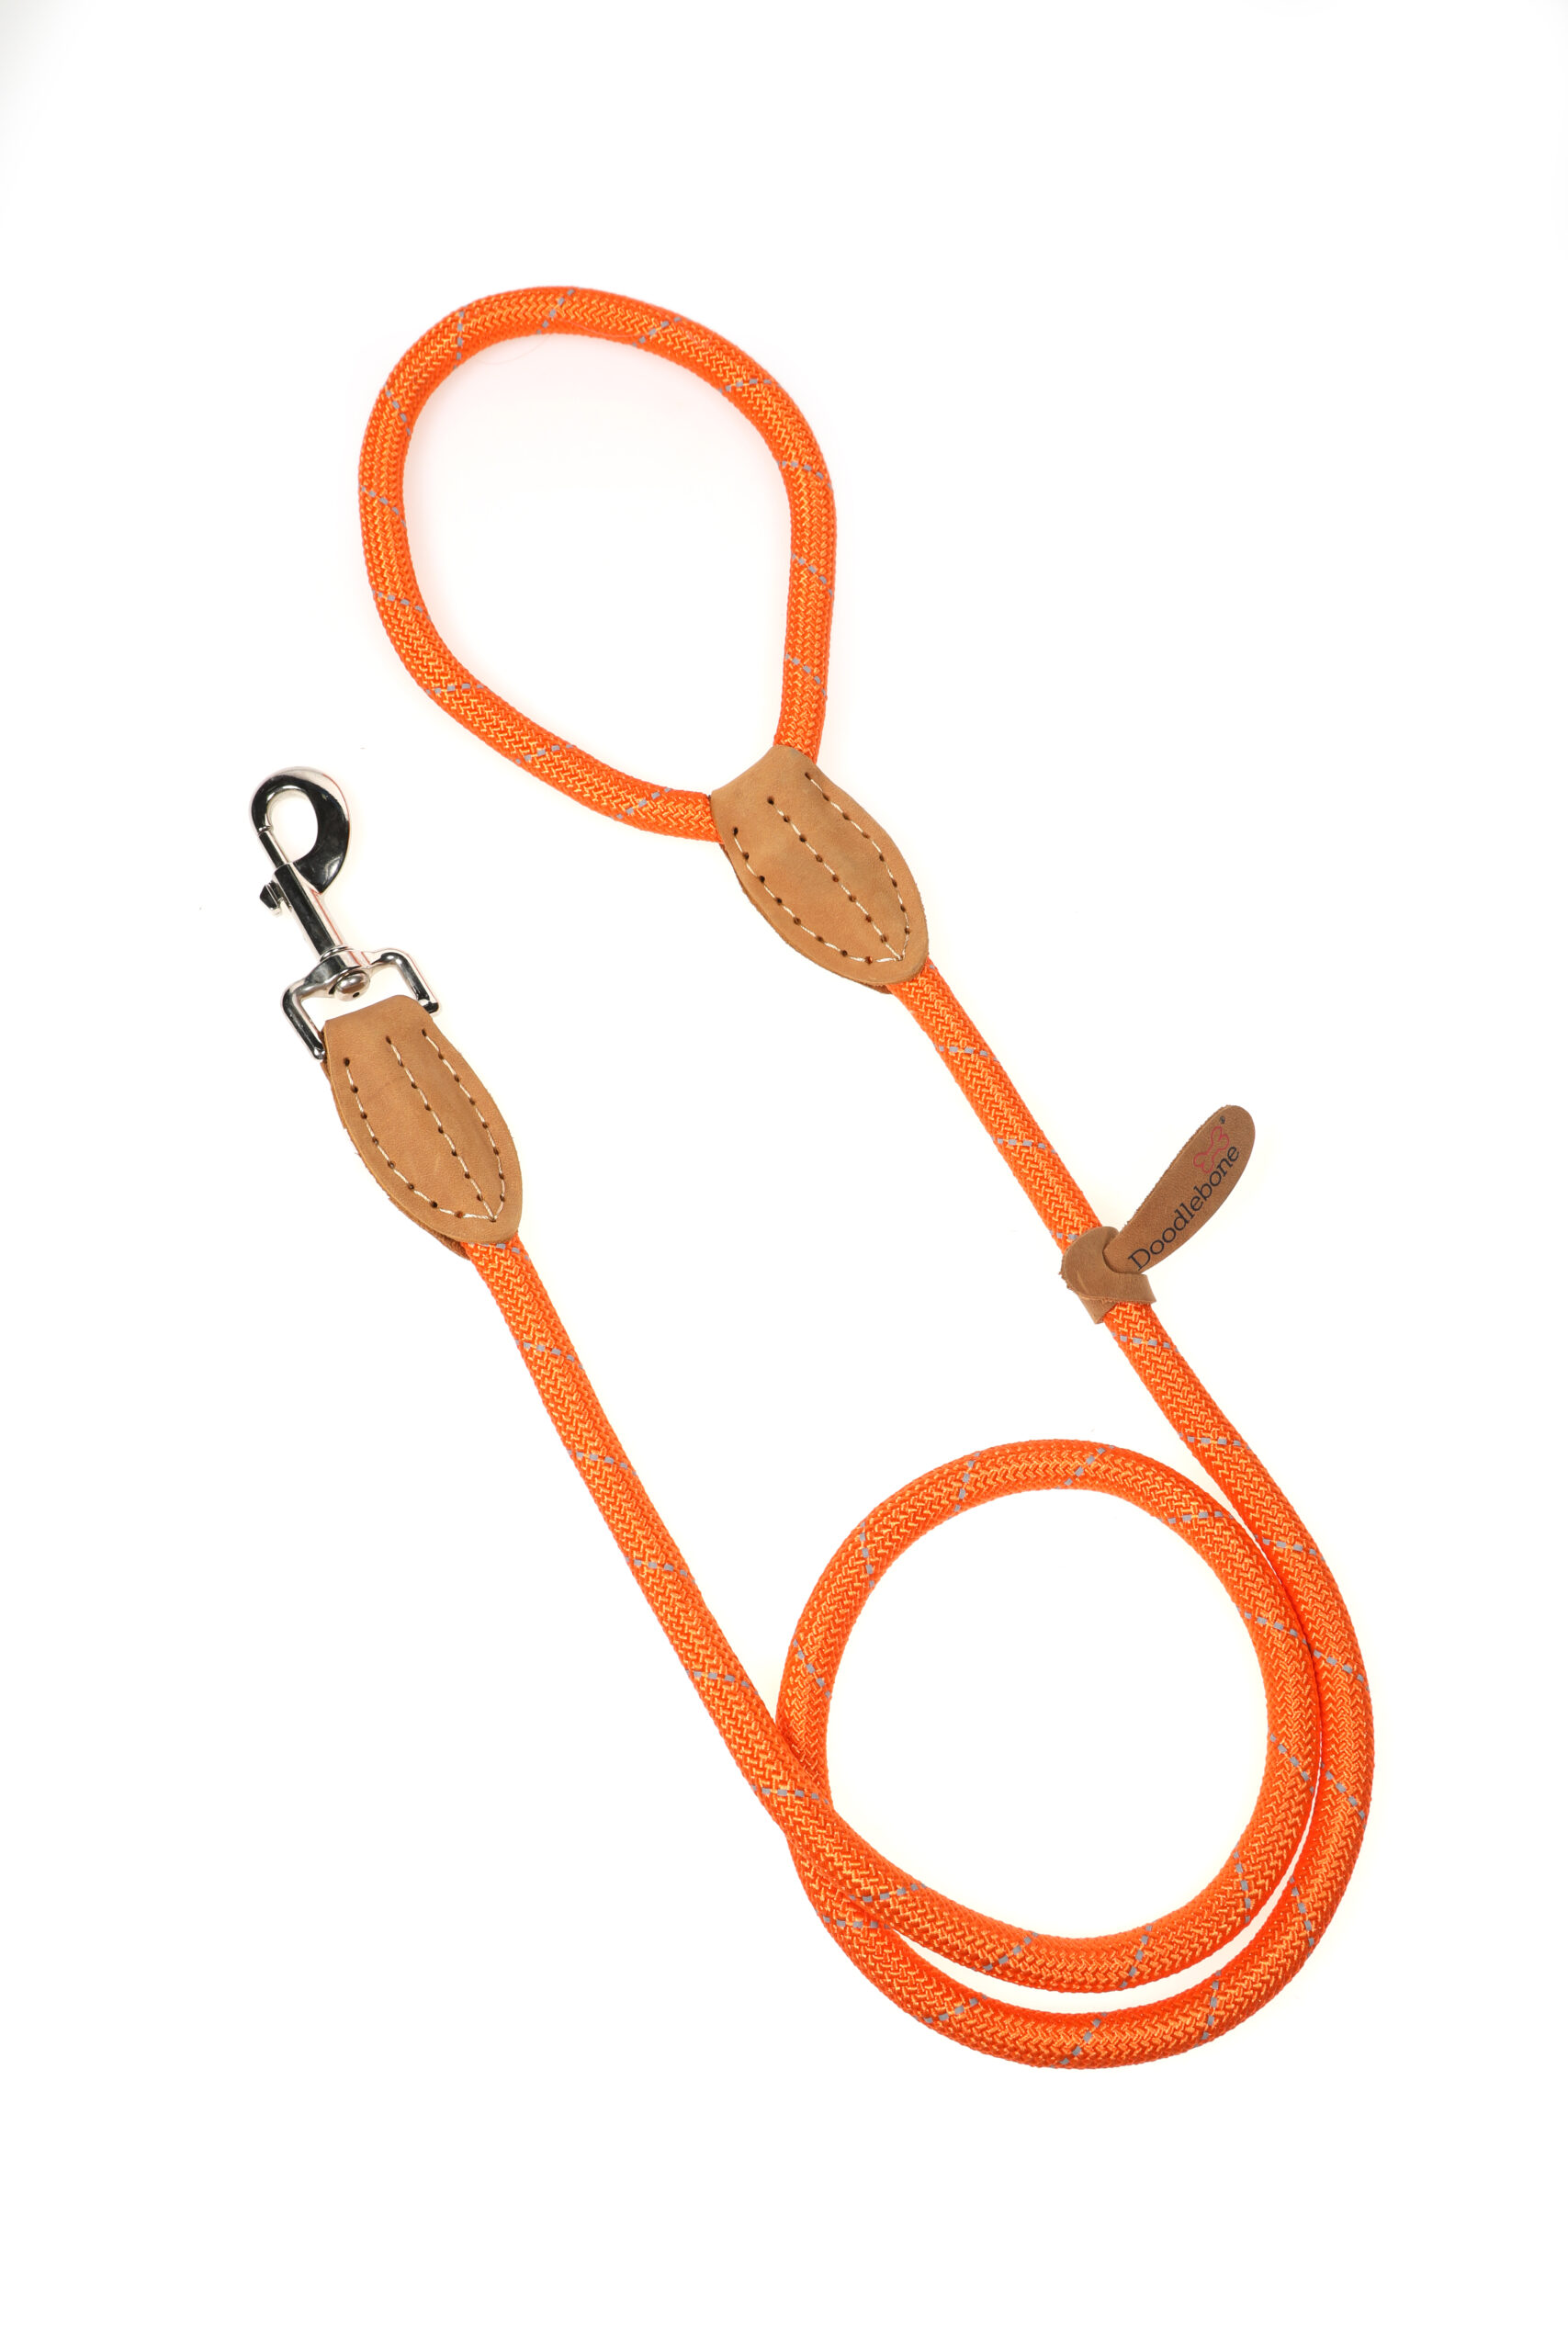 Doodlebone Originals Orange Rope Dog Lead